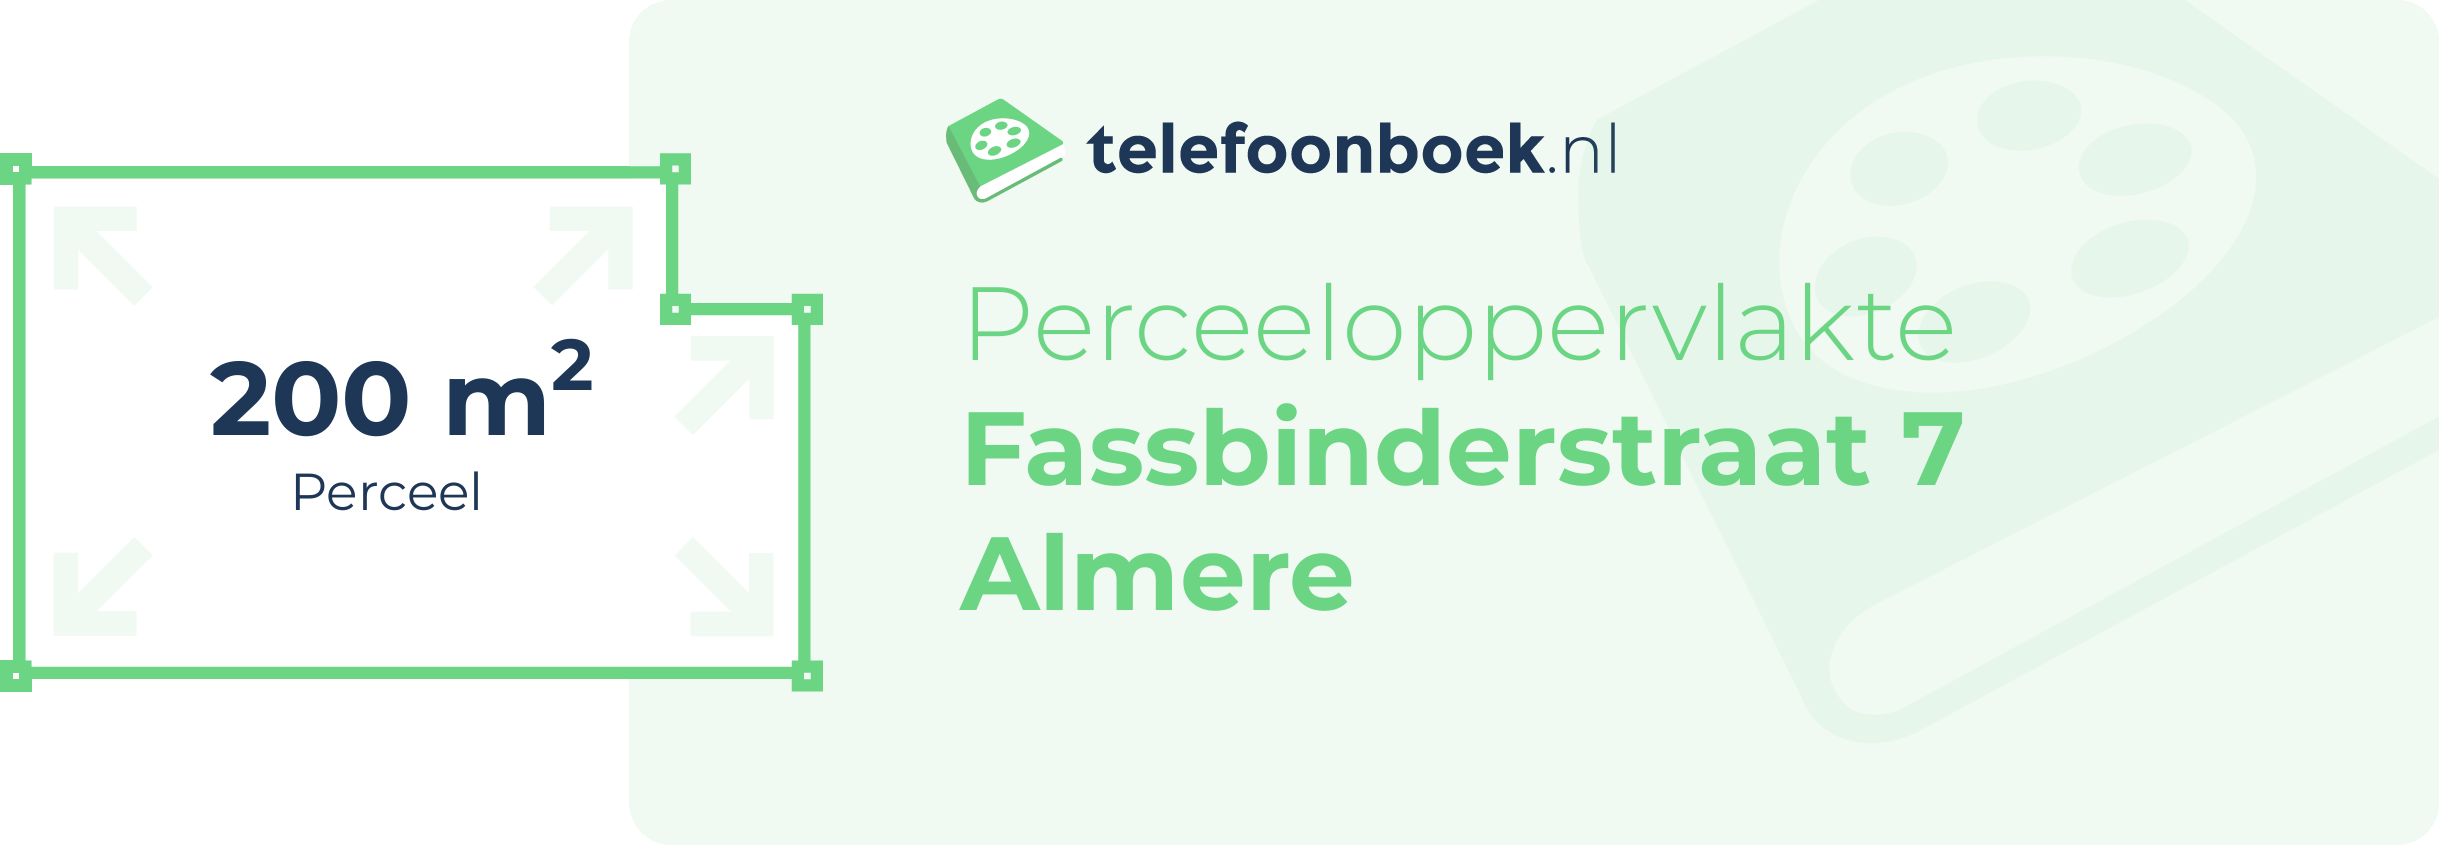 Perceeloppervlakte Fassbinderstraat 7 Almere